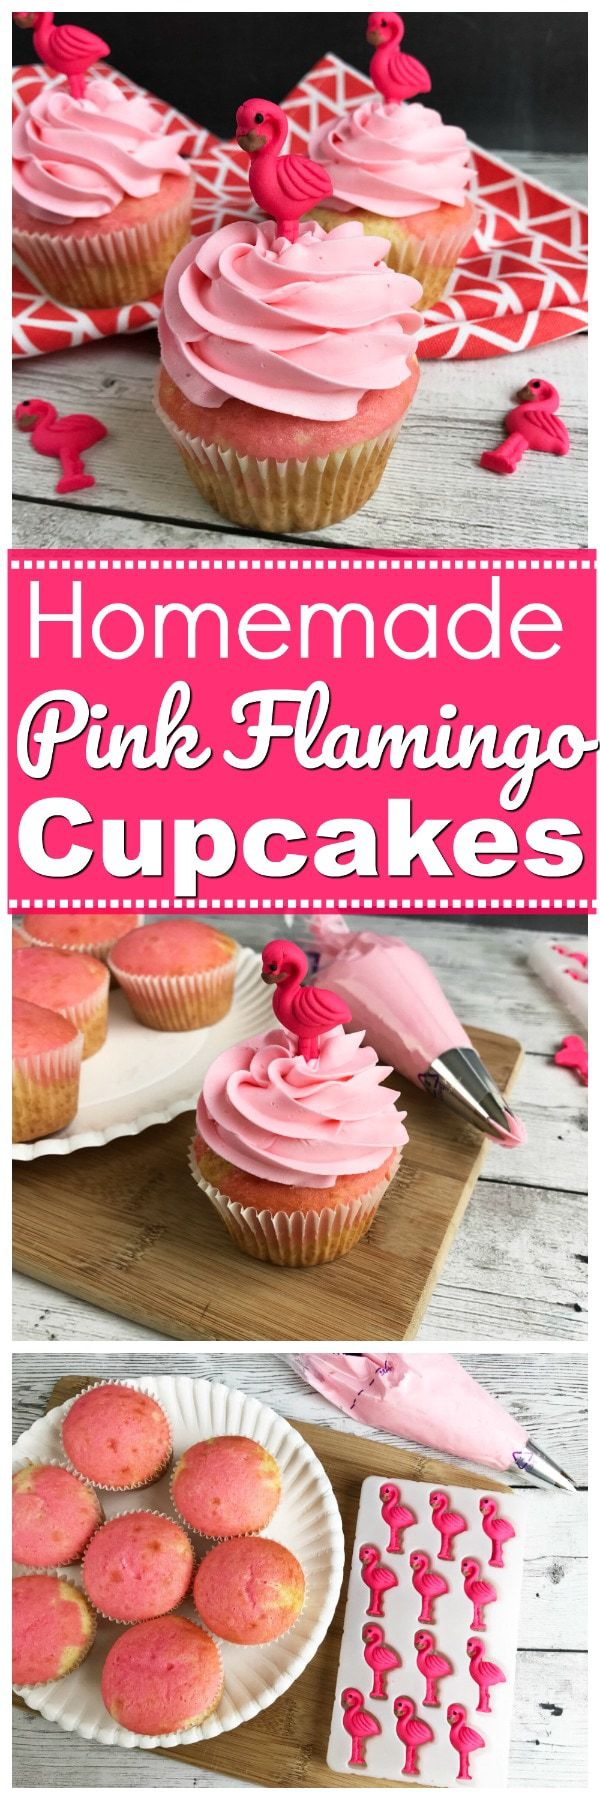 homemade flamingo cupcakes, Flamingo Cupcakes, Flamingo Desserts, pink flamingo cakes, pink flamingo birthday parties, beach themed birthday cupcakes, beach themed cupcakes, flamingo desserts, desserts with flamingos, cupcakes with flamingos, edible pink flamingo cupcake toppers